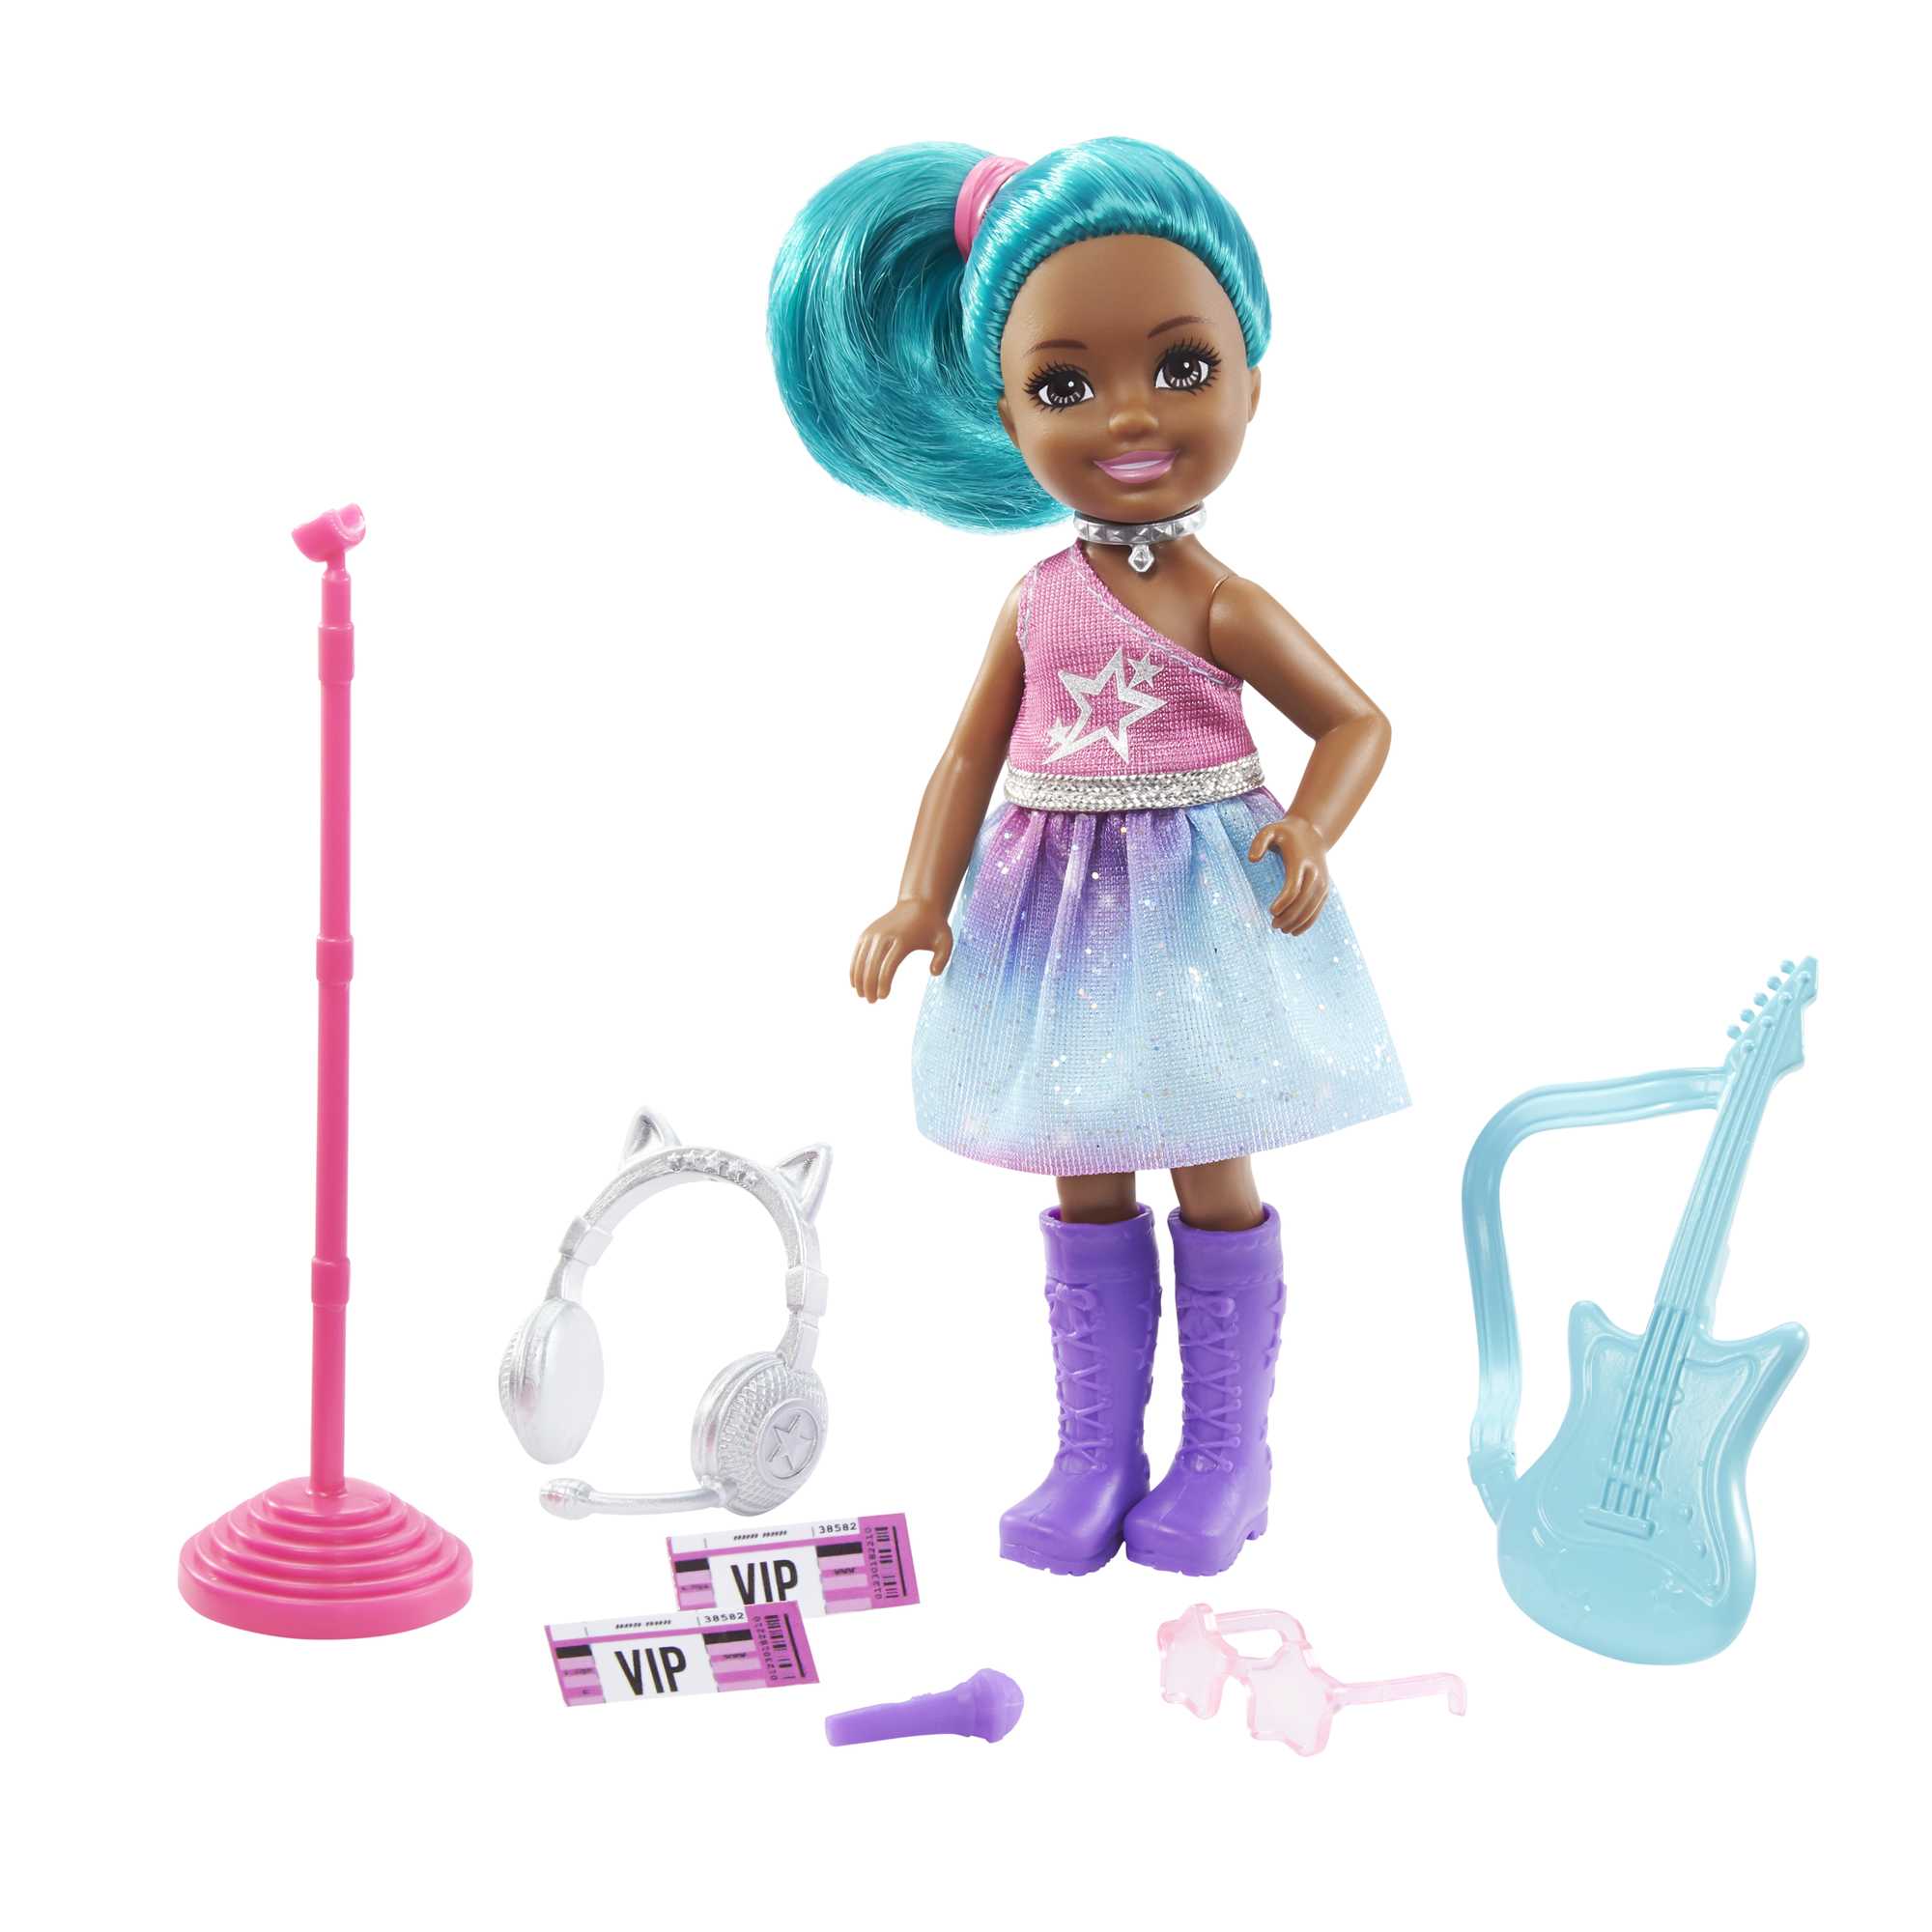 Barbie Chelsea Can Be Playset GTN89 | Mattel